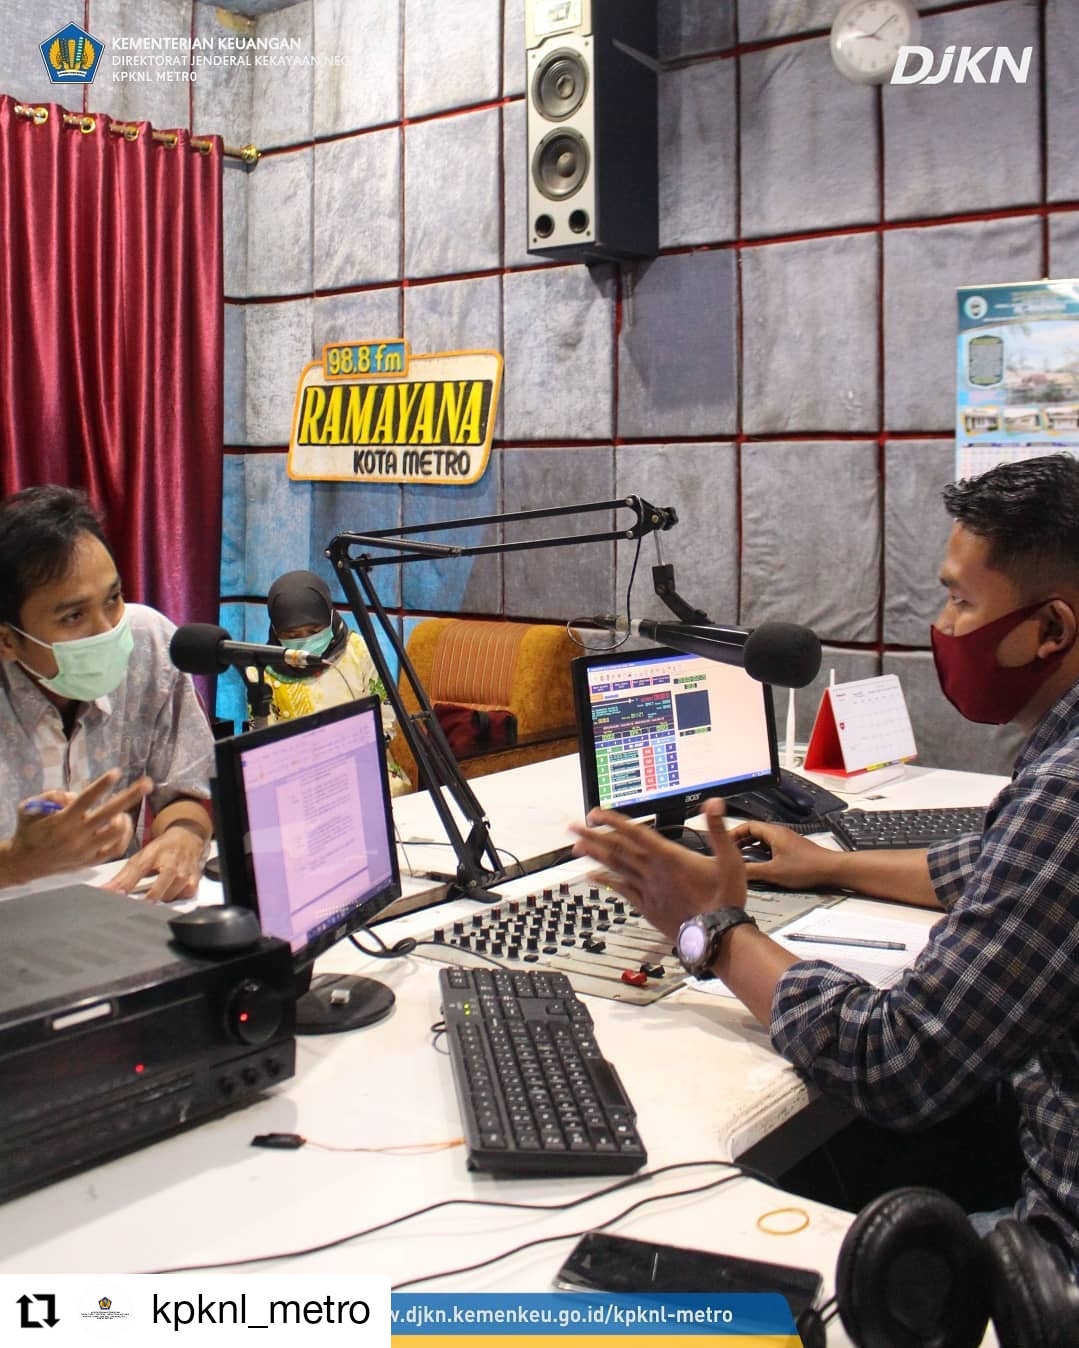 KPKNL Metro Berikan Pencerahan Penyelesaian Piutang Negara melalui Radio Ramayana FM